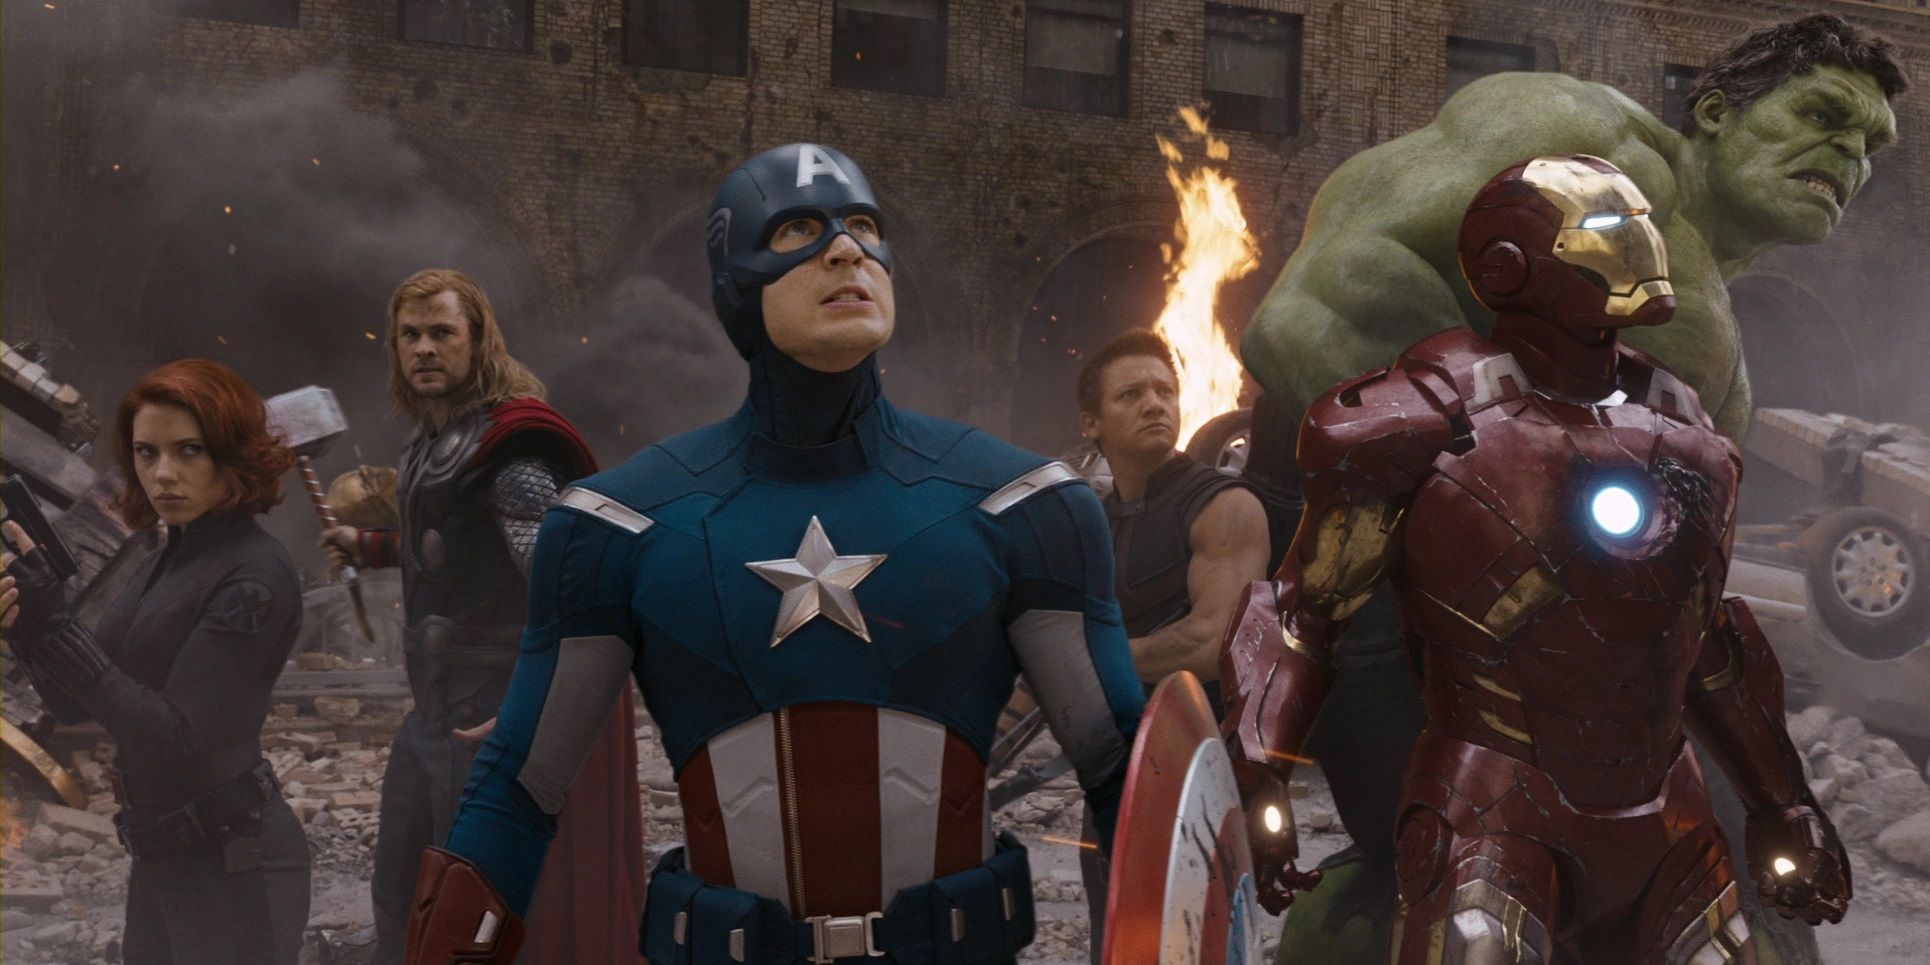 The Avengers assemble for the Battle of New York